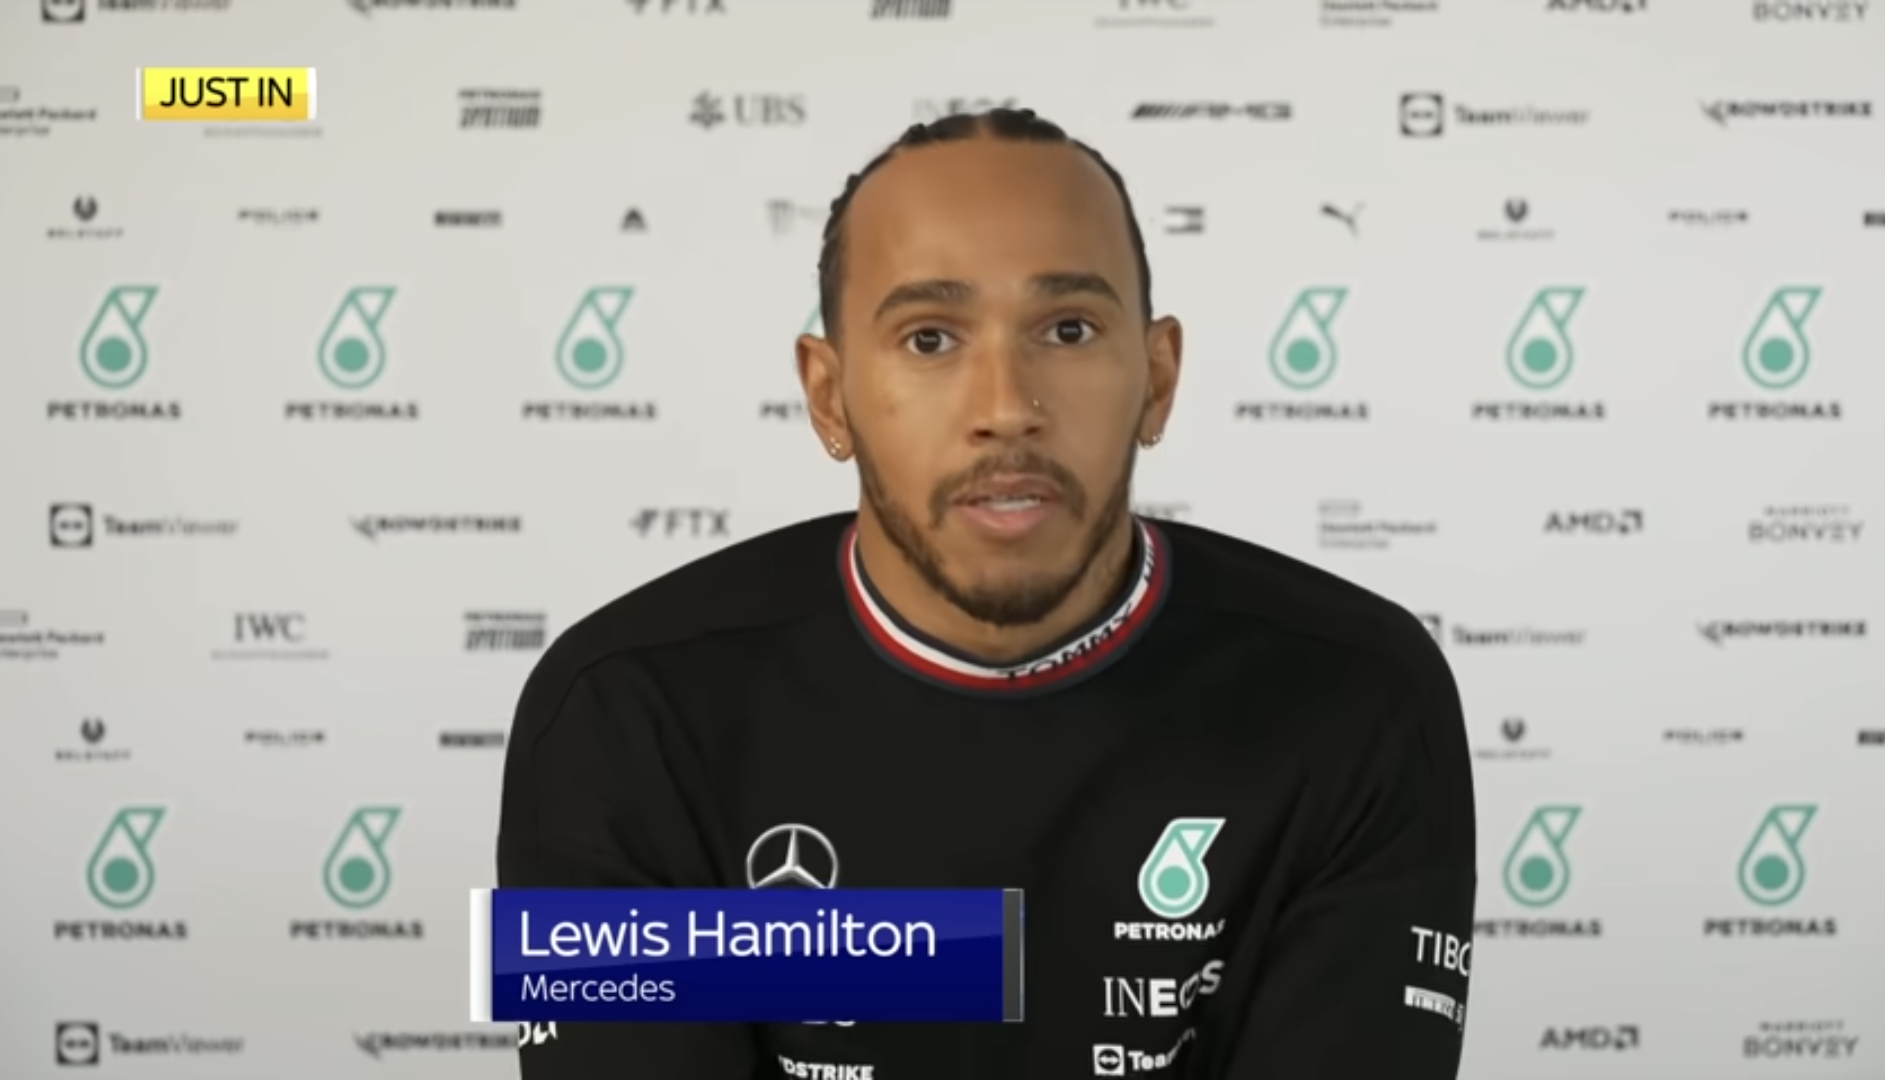 Hamilton responds to FIA changes